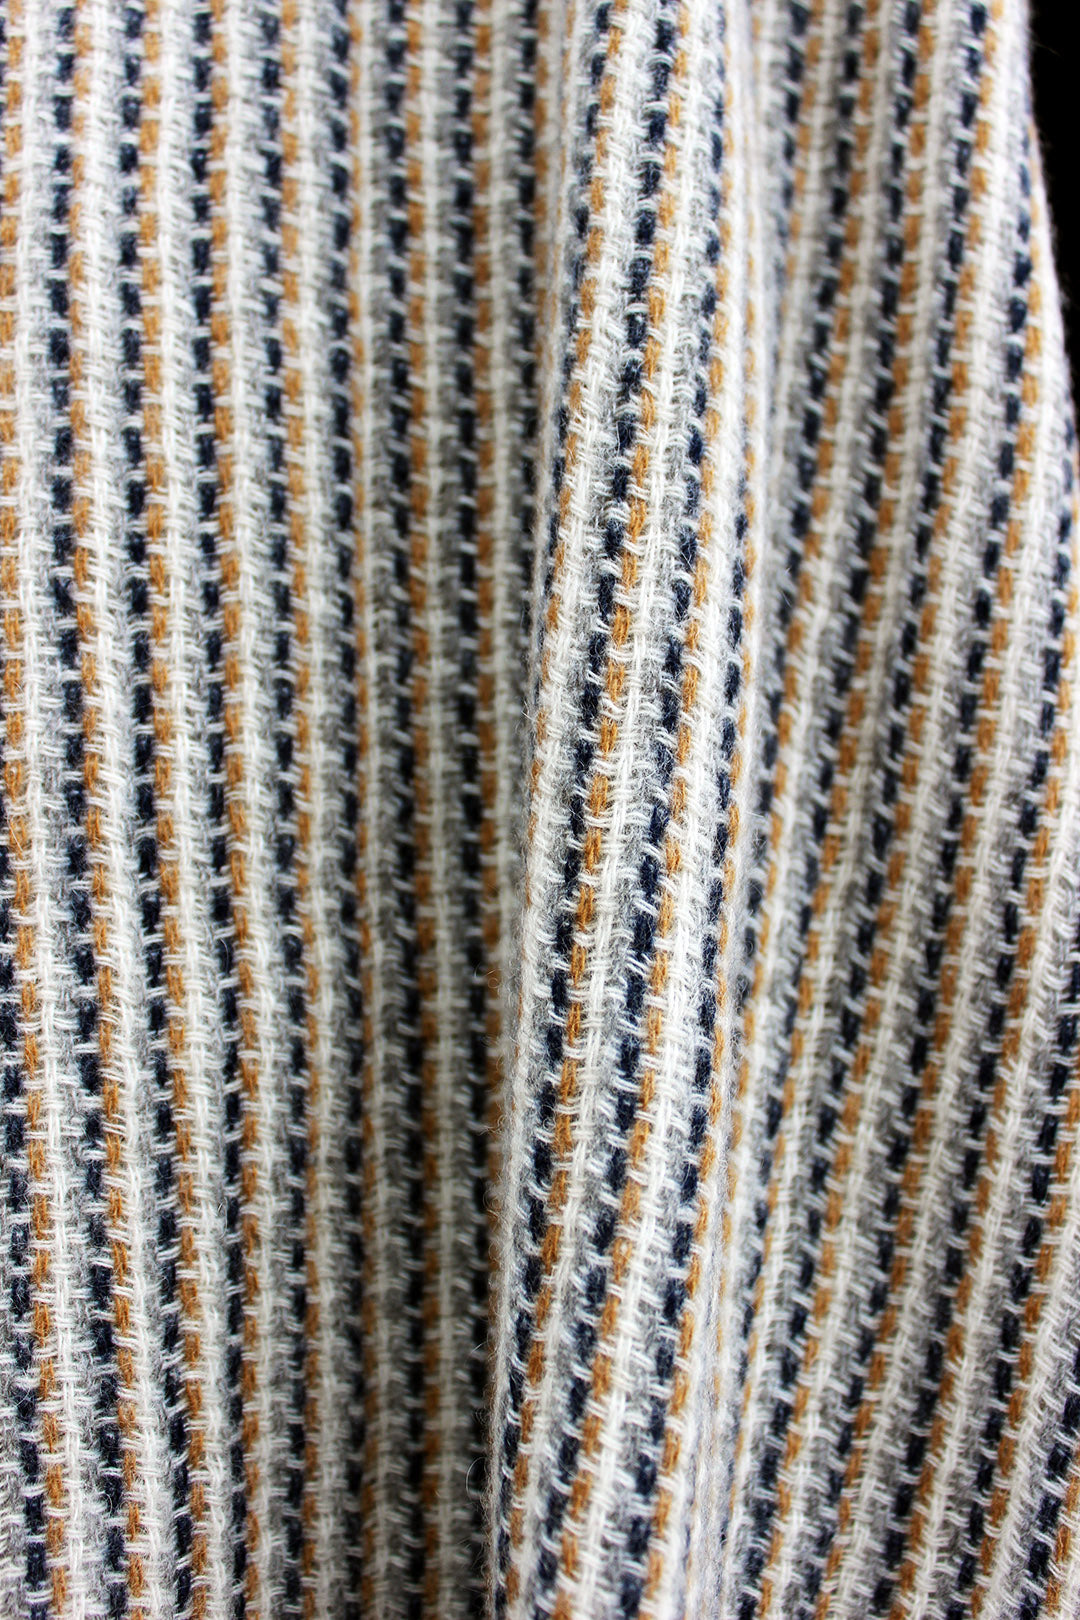 100% Cashmere Scarf in barley colourway. Scottish Textiles Showcase